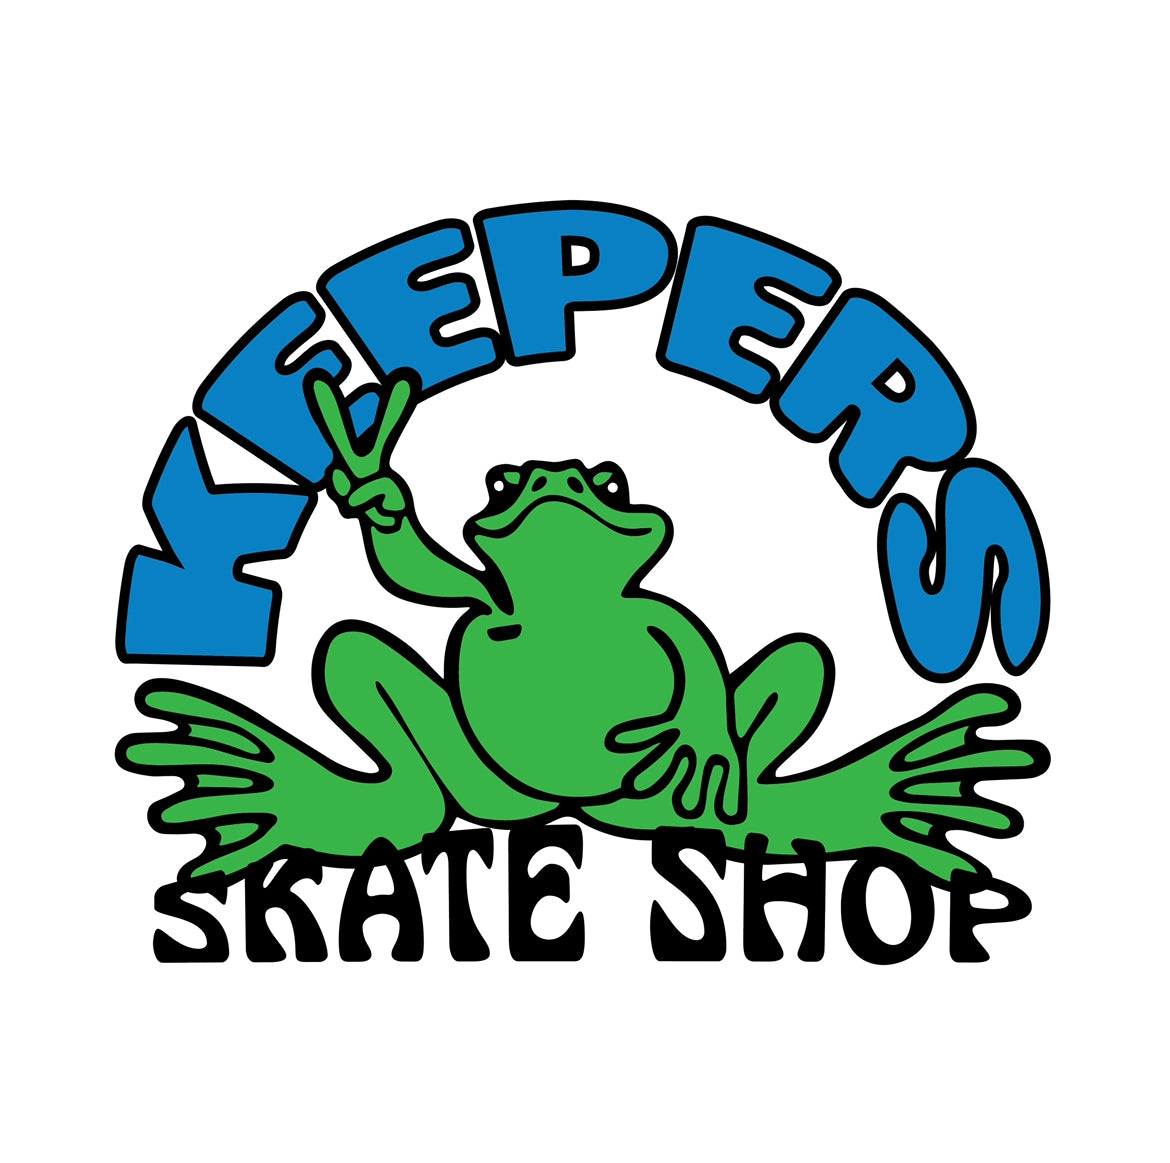 KEEPERS SKATE SHOP